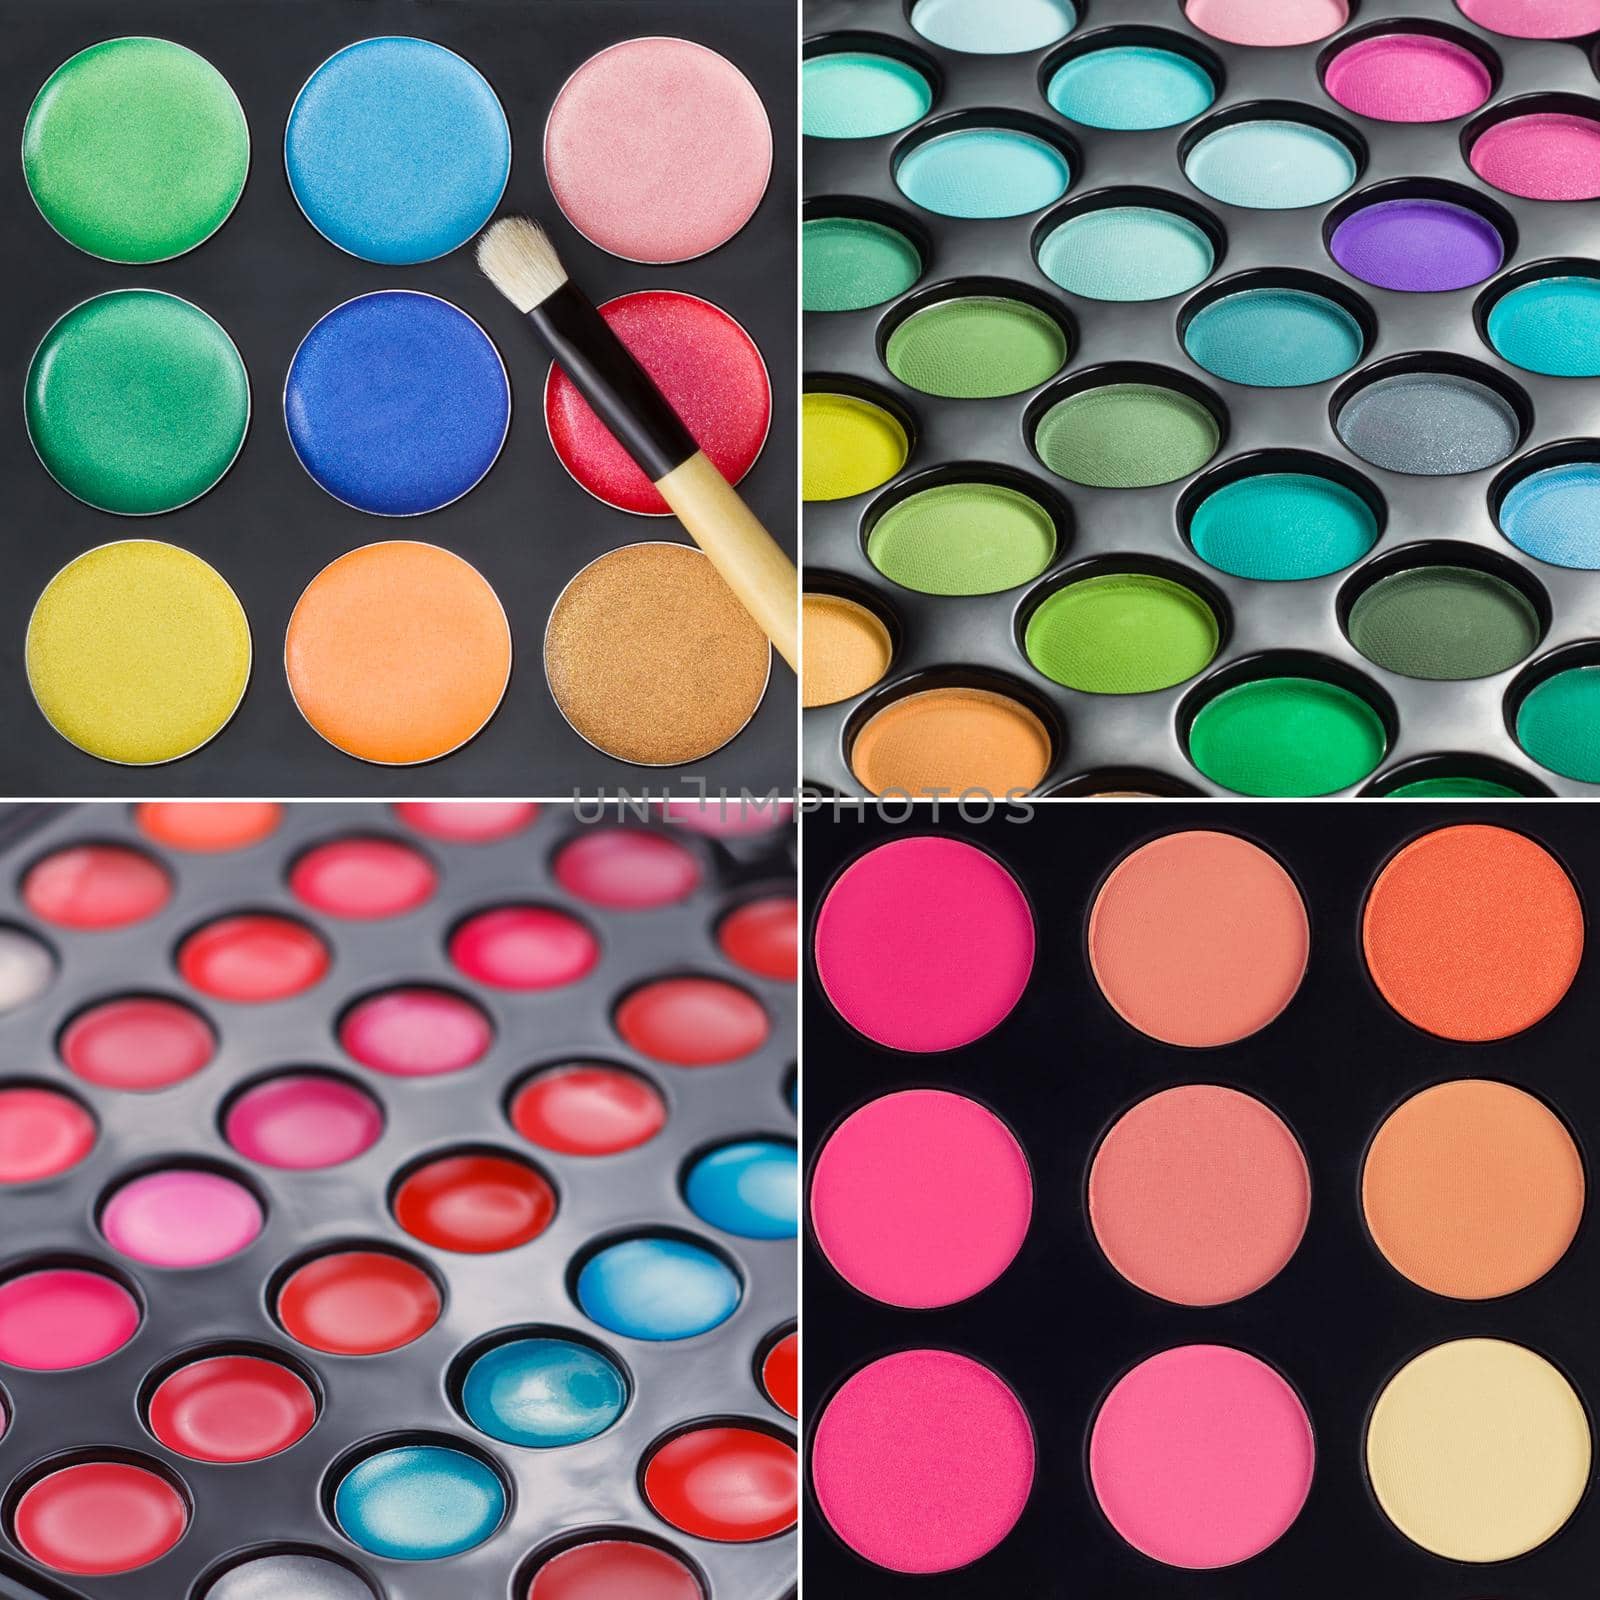 Set of colorful makeup palettes. Makeup background by dmitryz